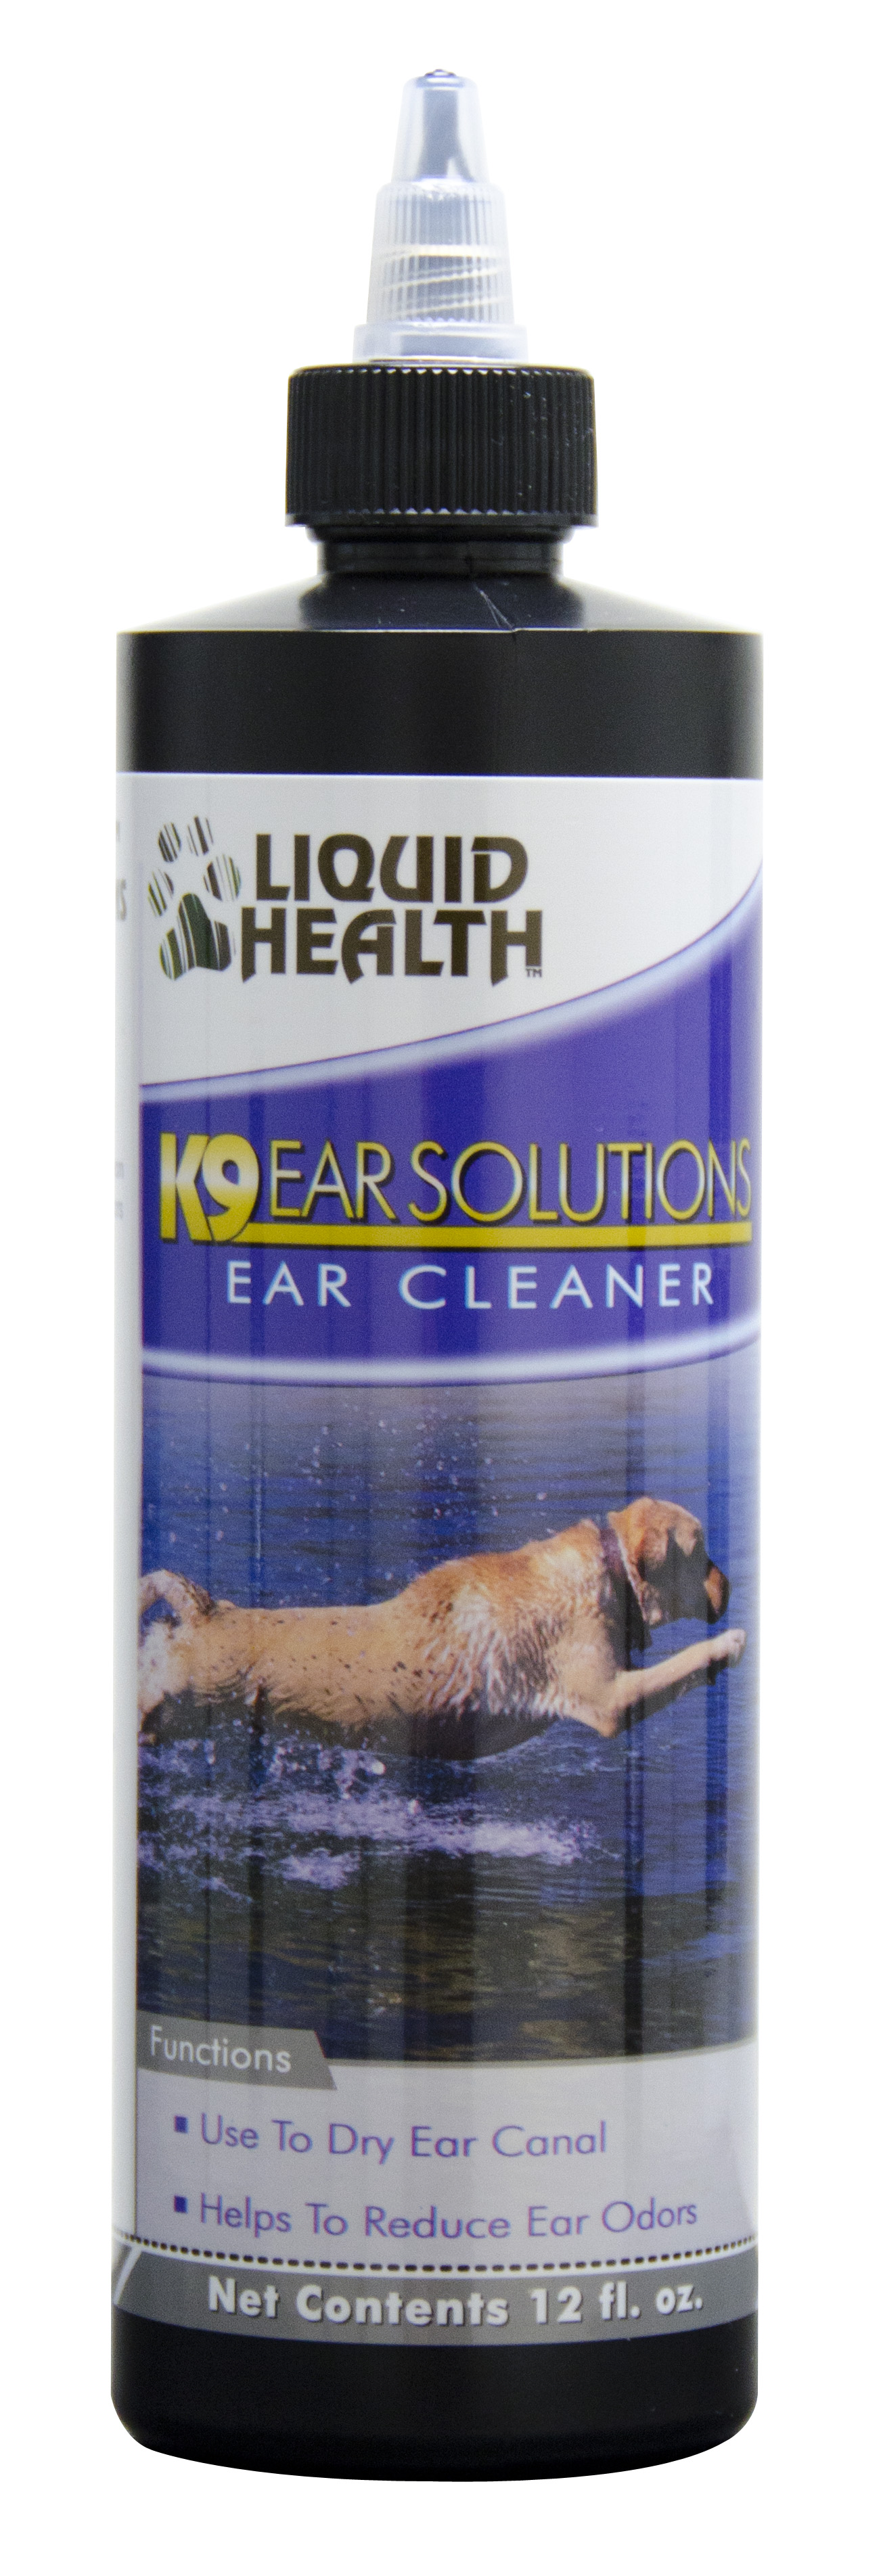 Liquid Health K9 Ear Solutions